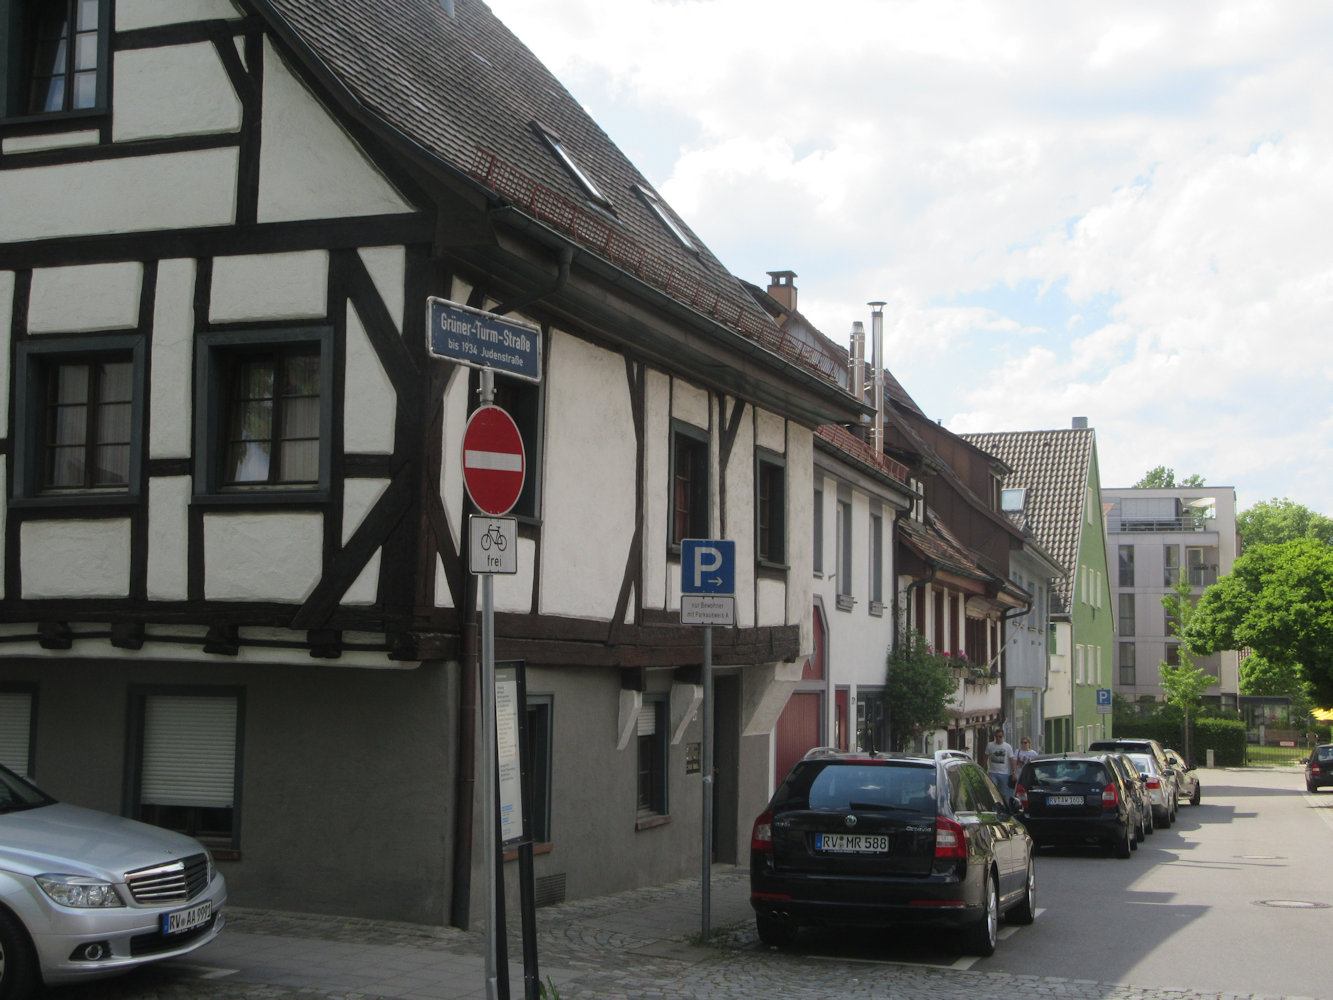 Grüner-Turm-Straße in Ravensburg